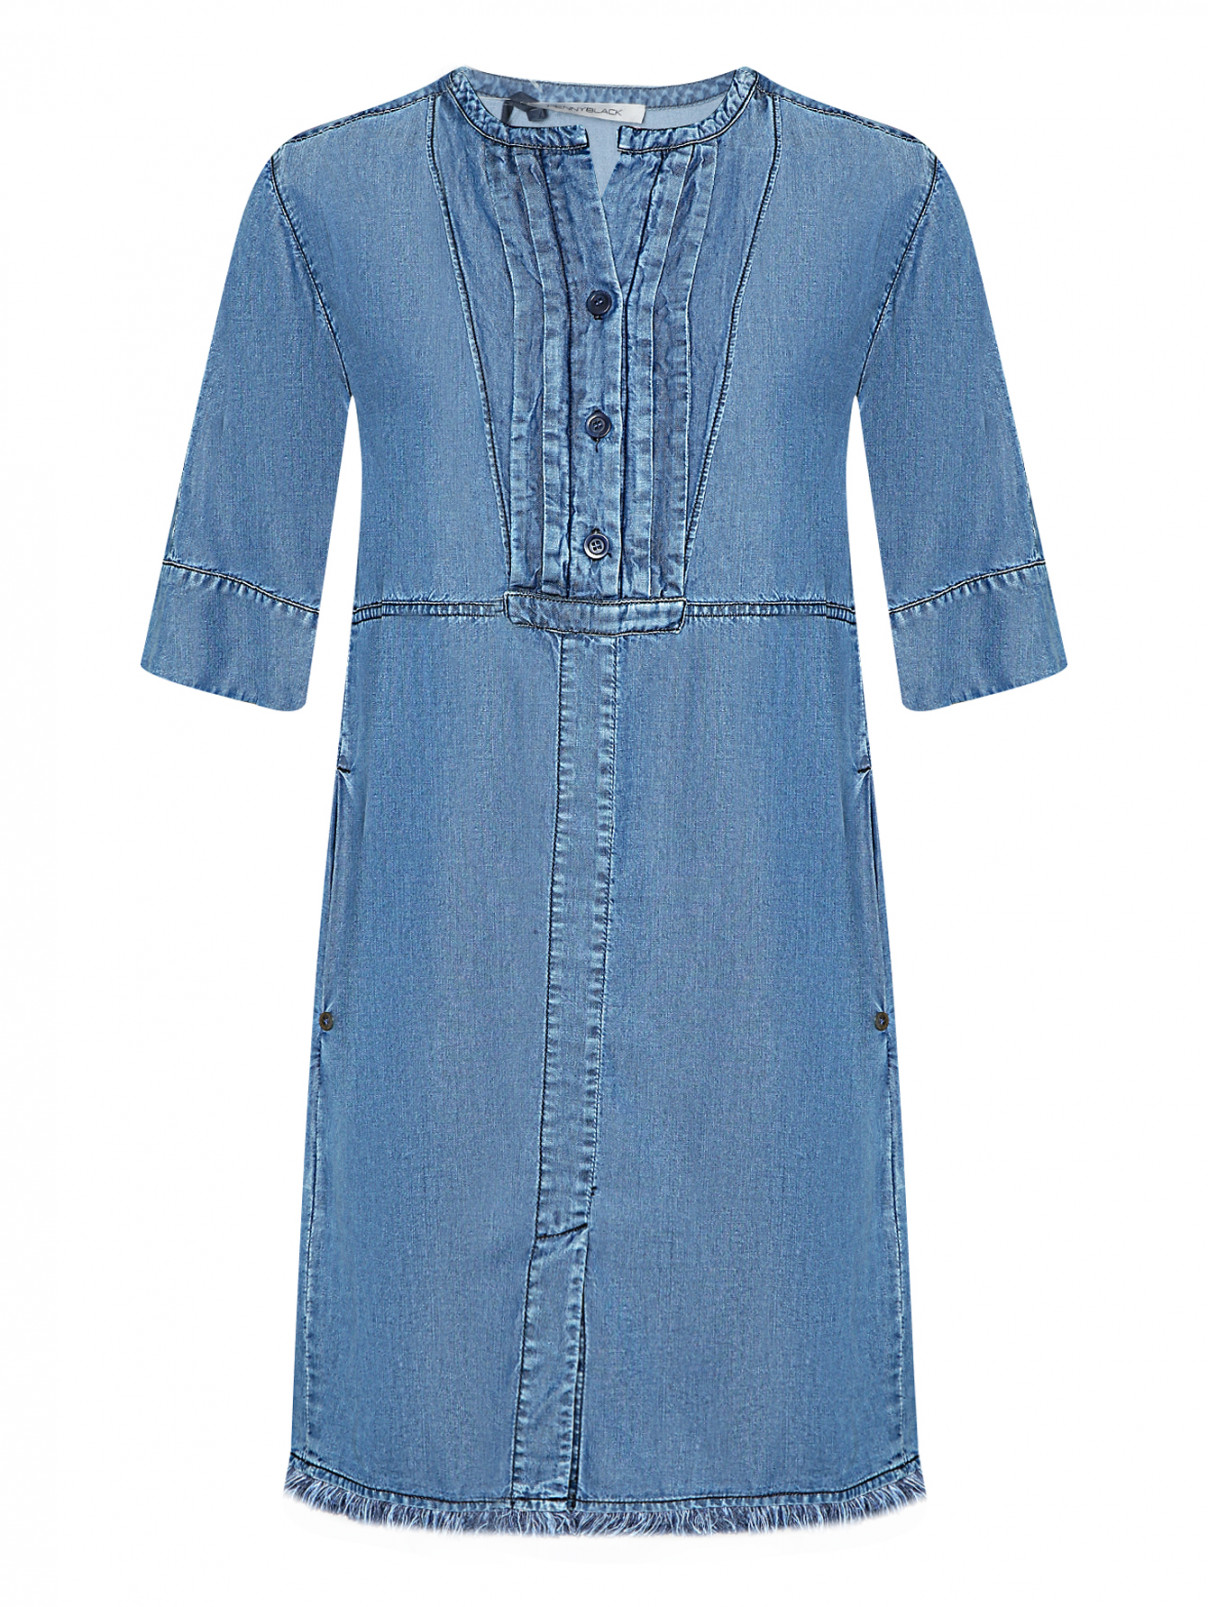 Платье прямого кроя с короткими рукавами PennyBlack  –  Общий вид  – Цвет:  Синий